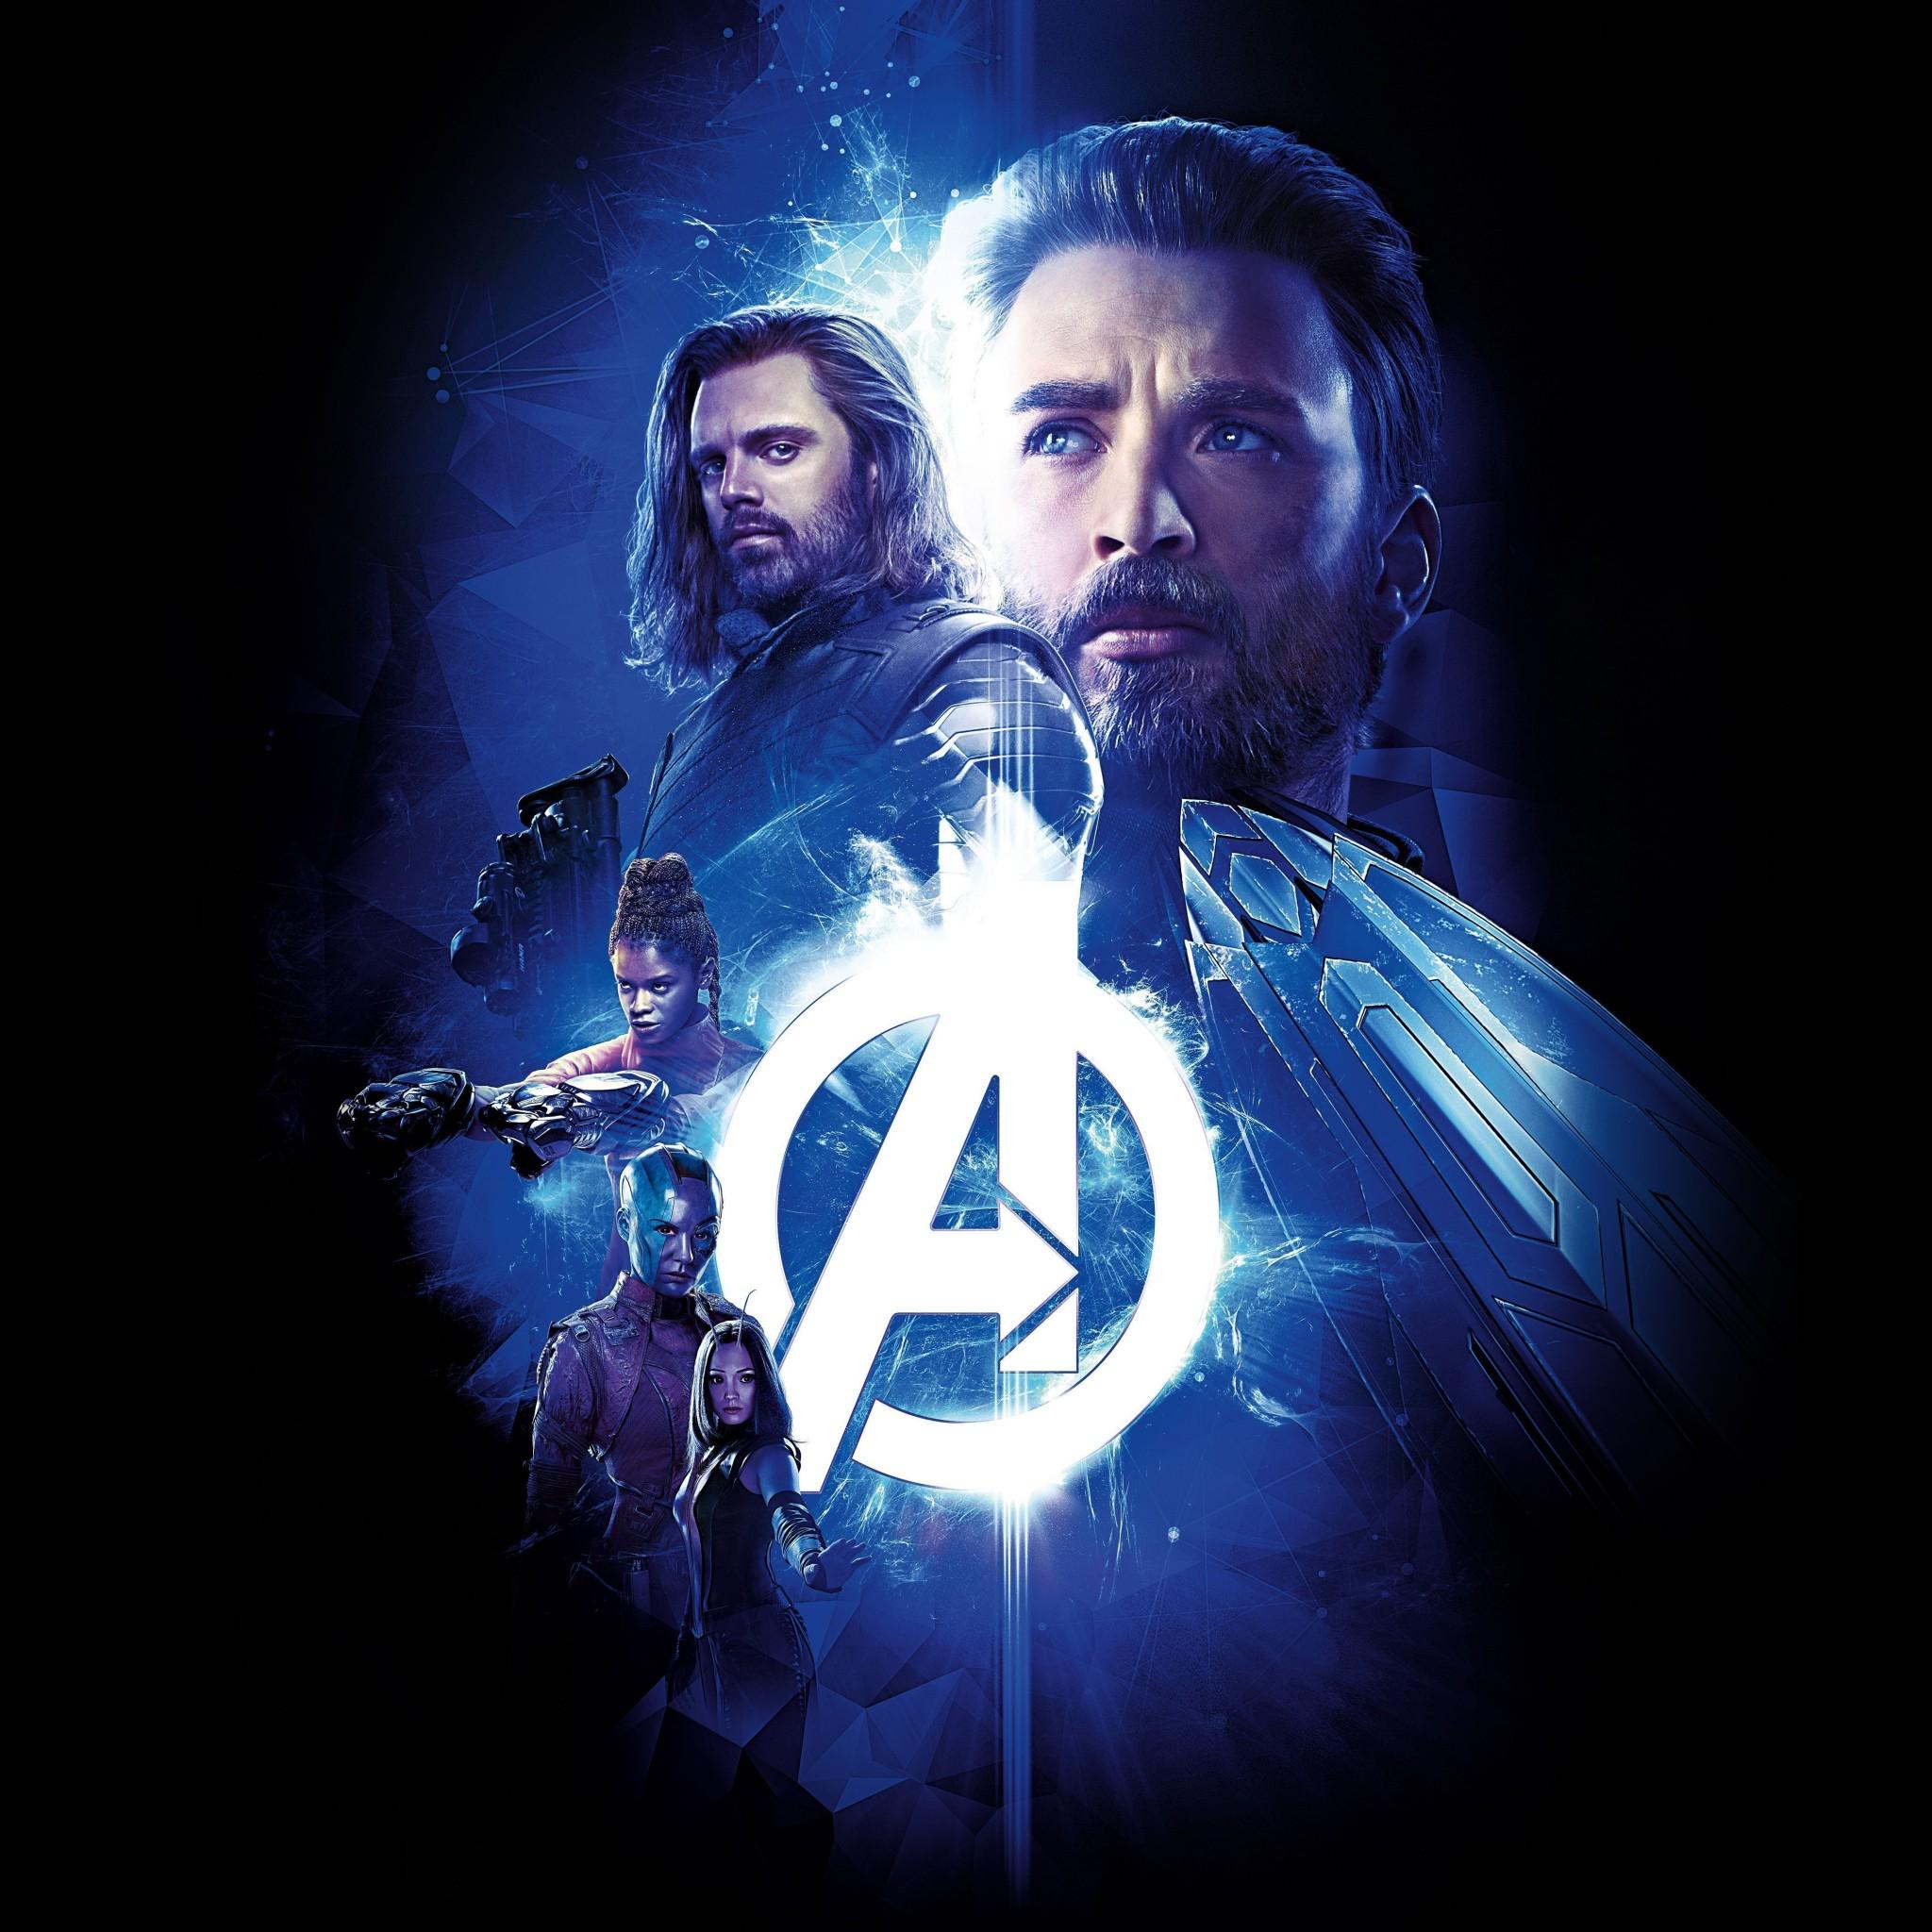 Avengers Endgame Action Pixels Movie Poster